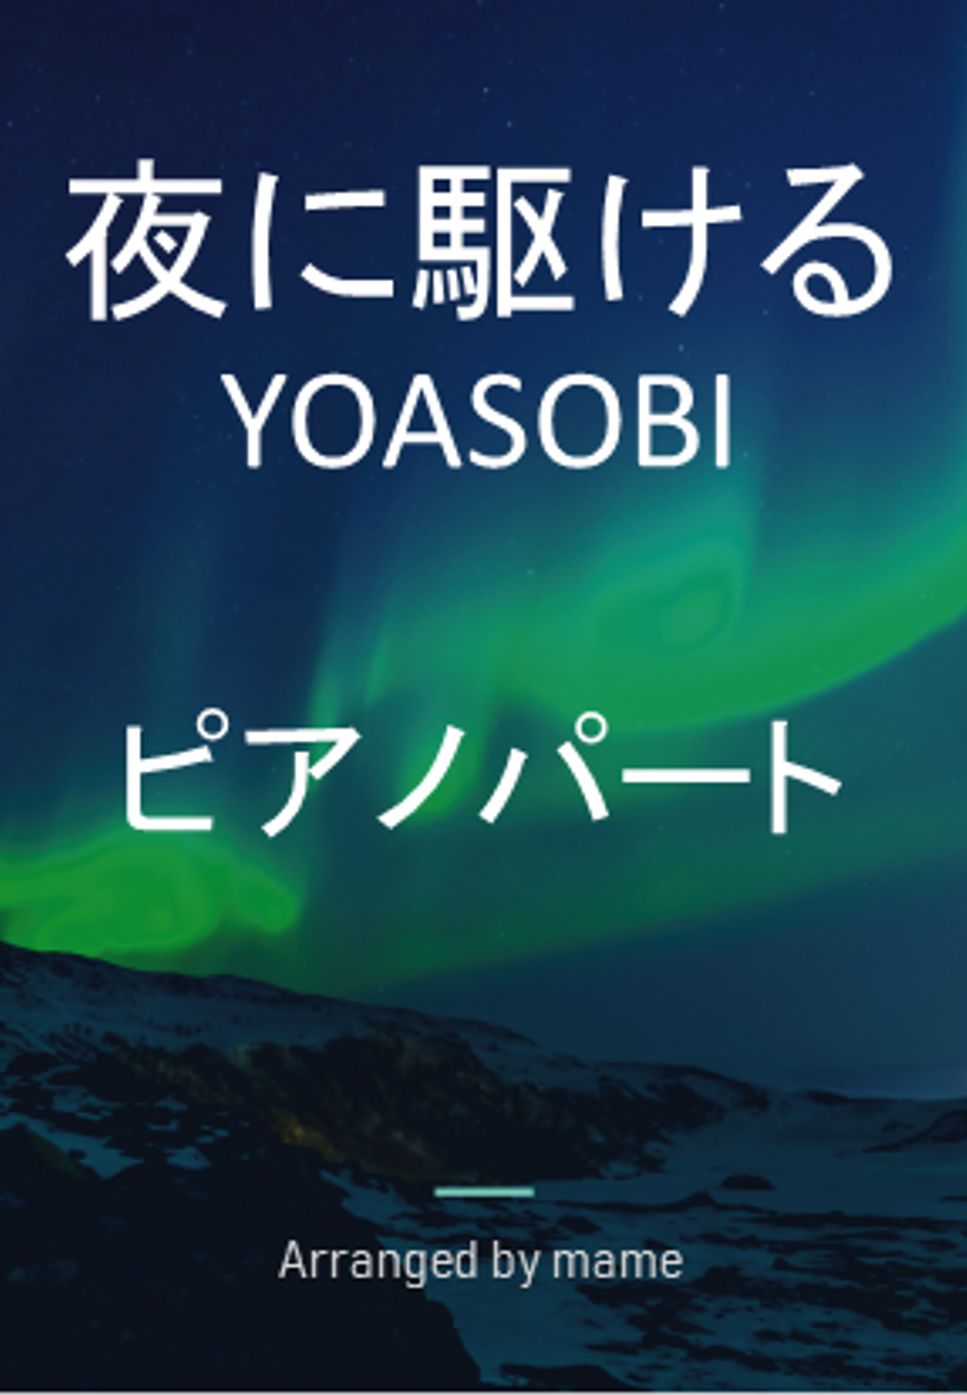 YOASOBI - 夜に駆ける (ピアノパート) by mame